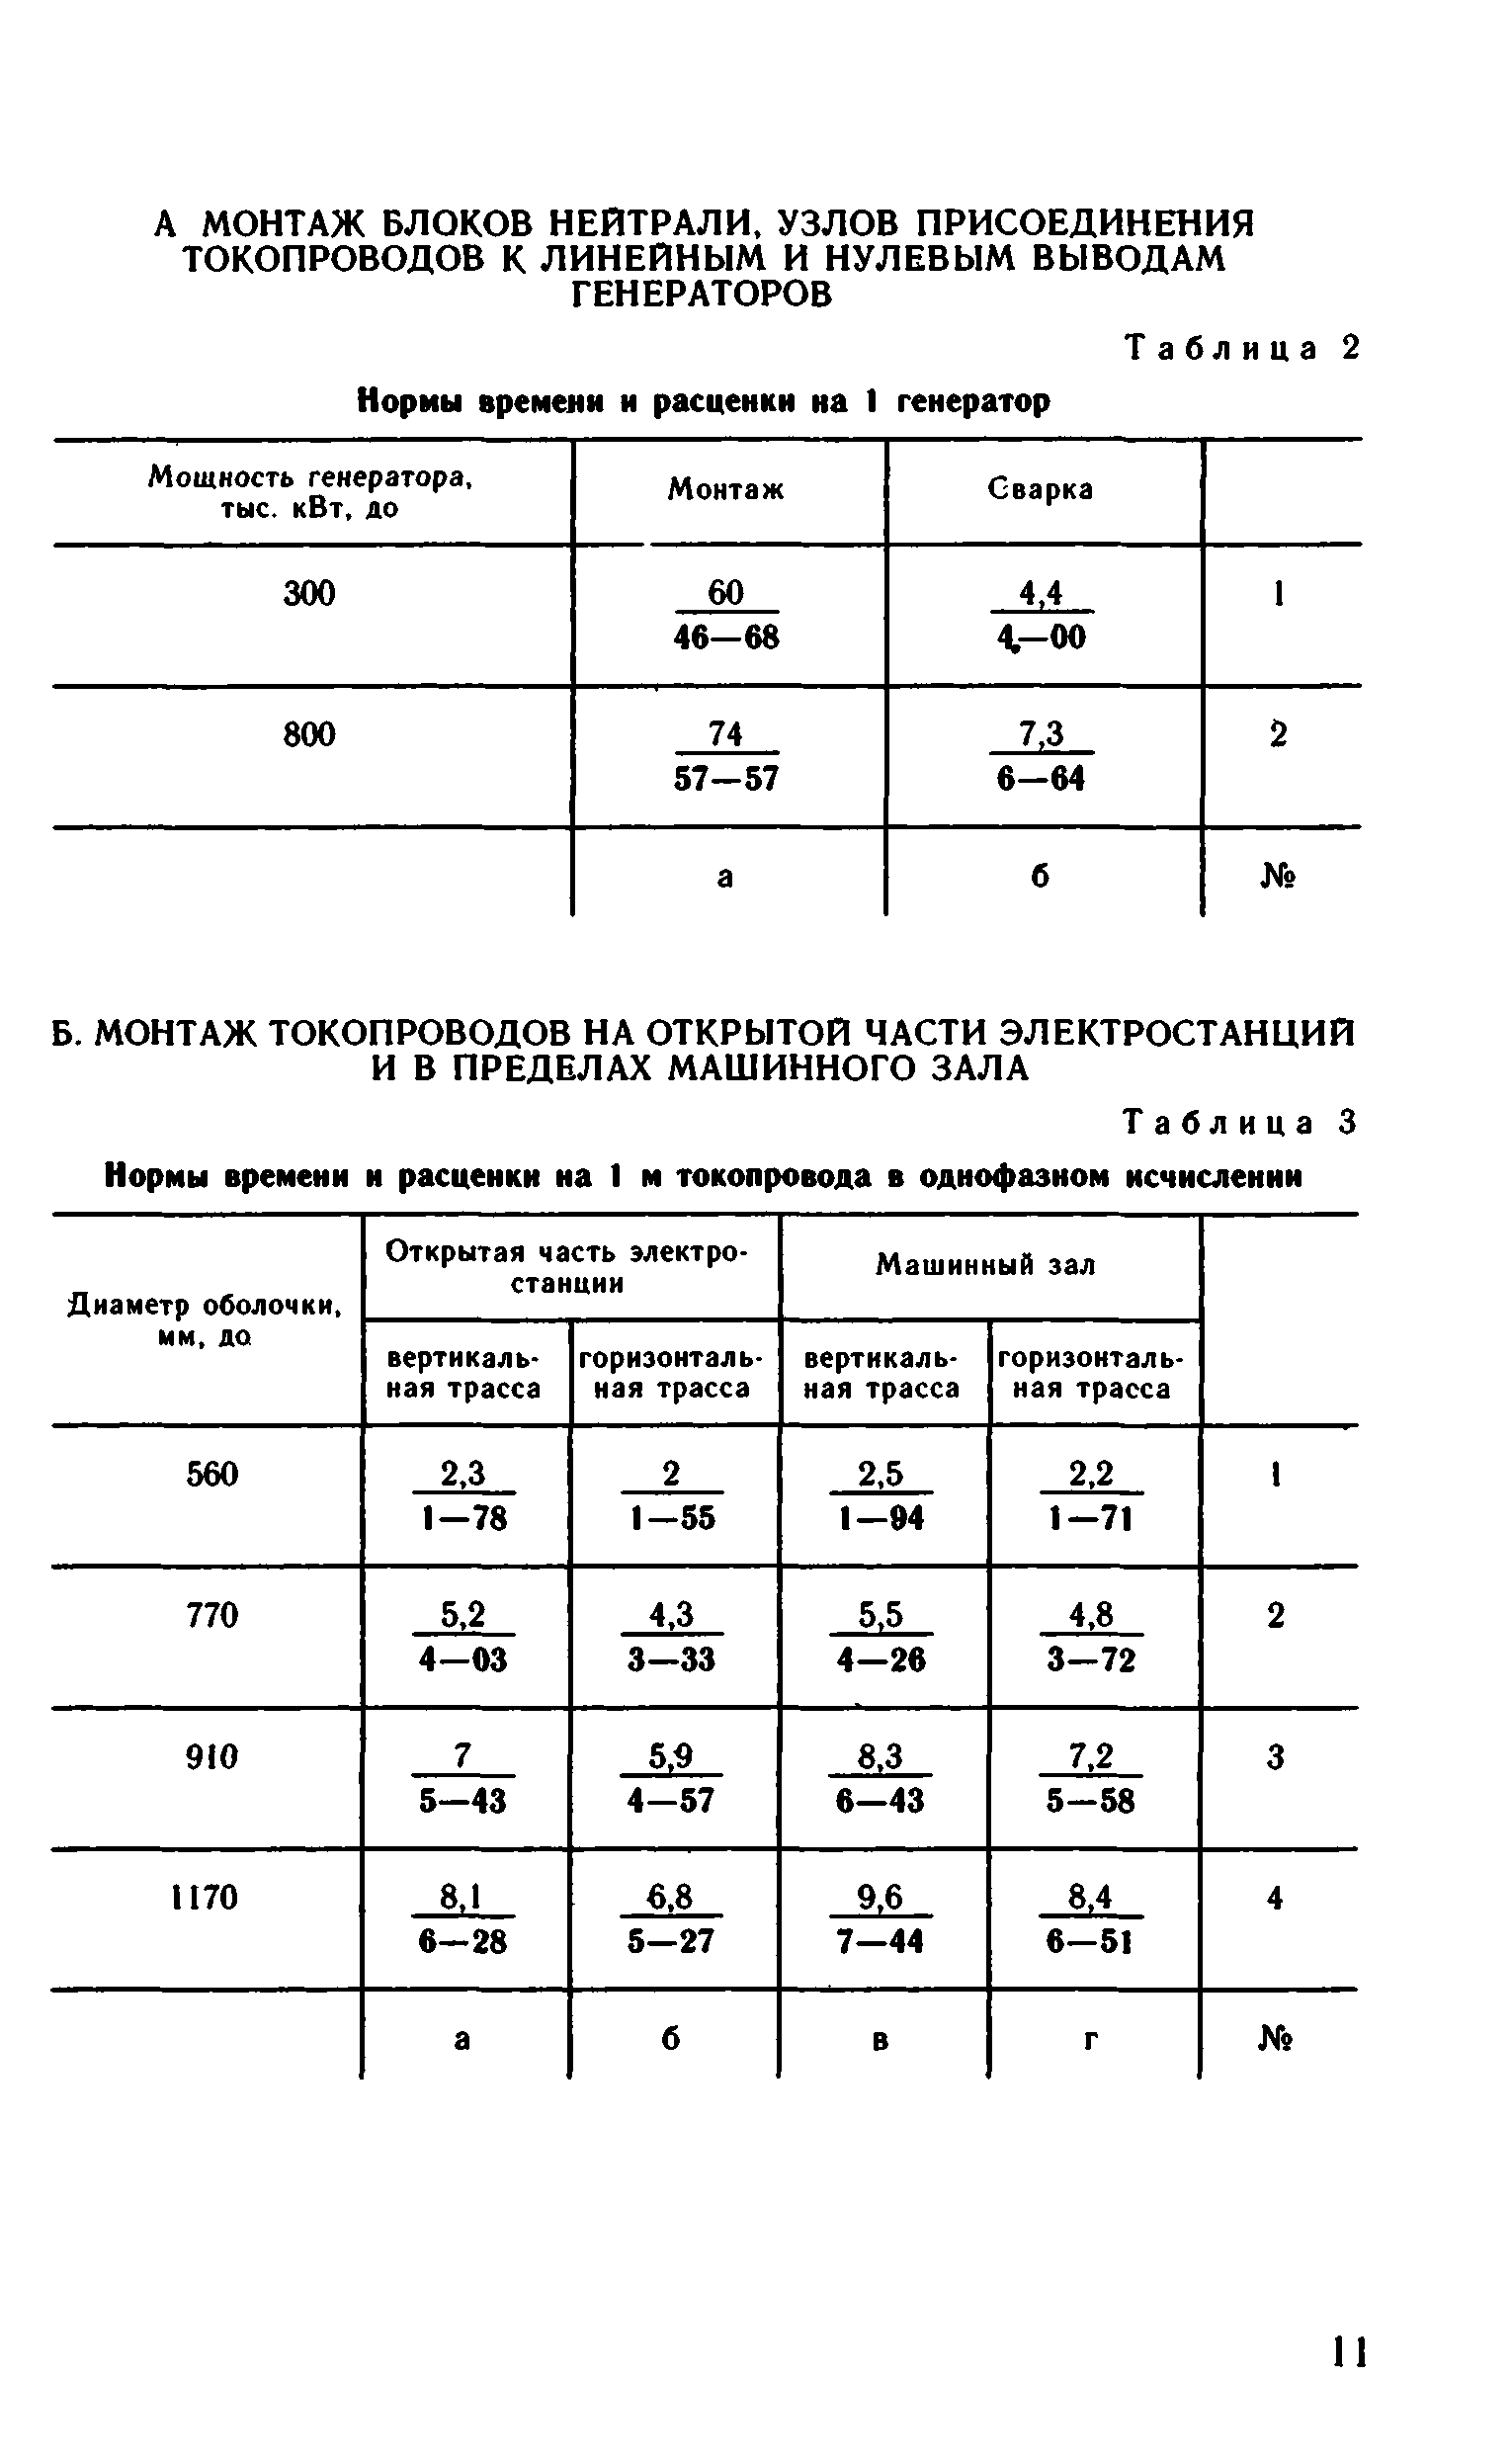 ВНиР В17-10